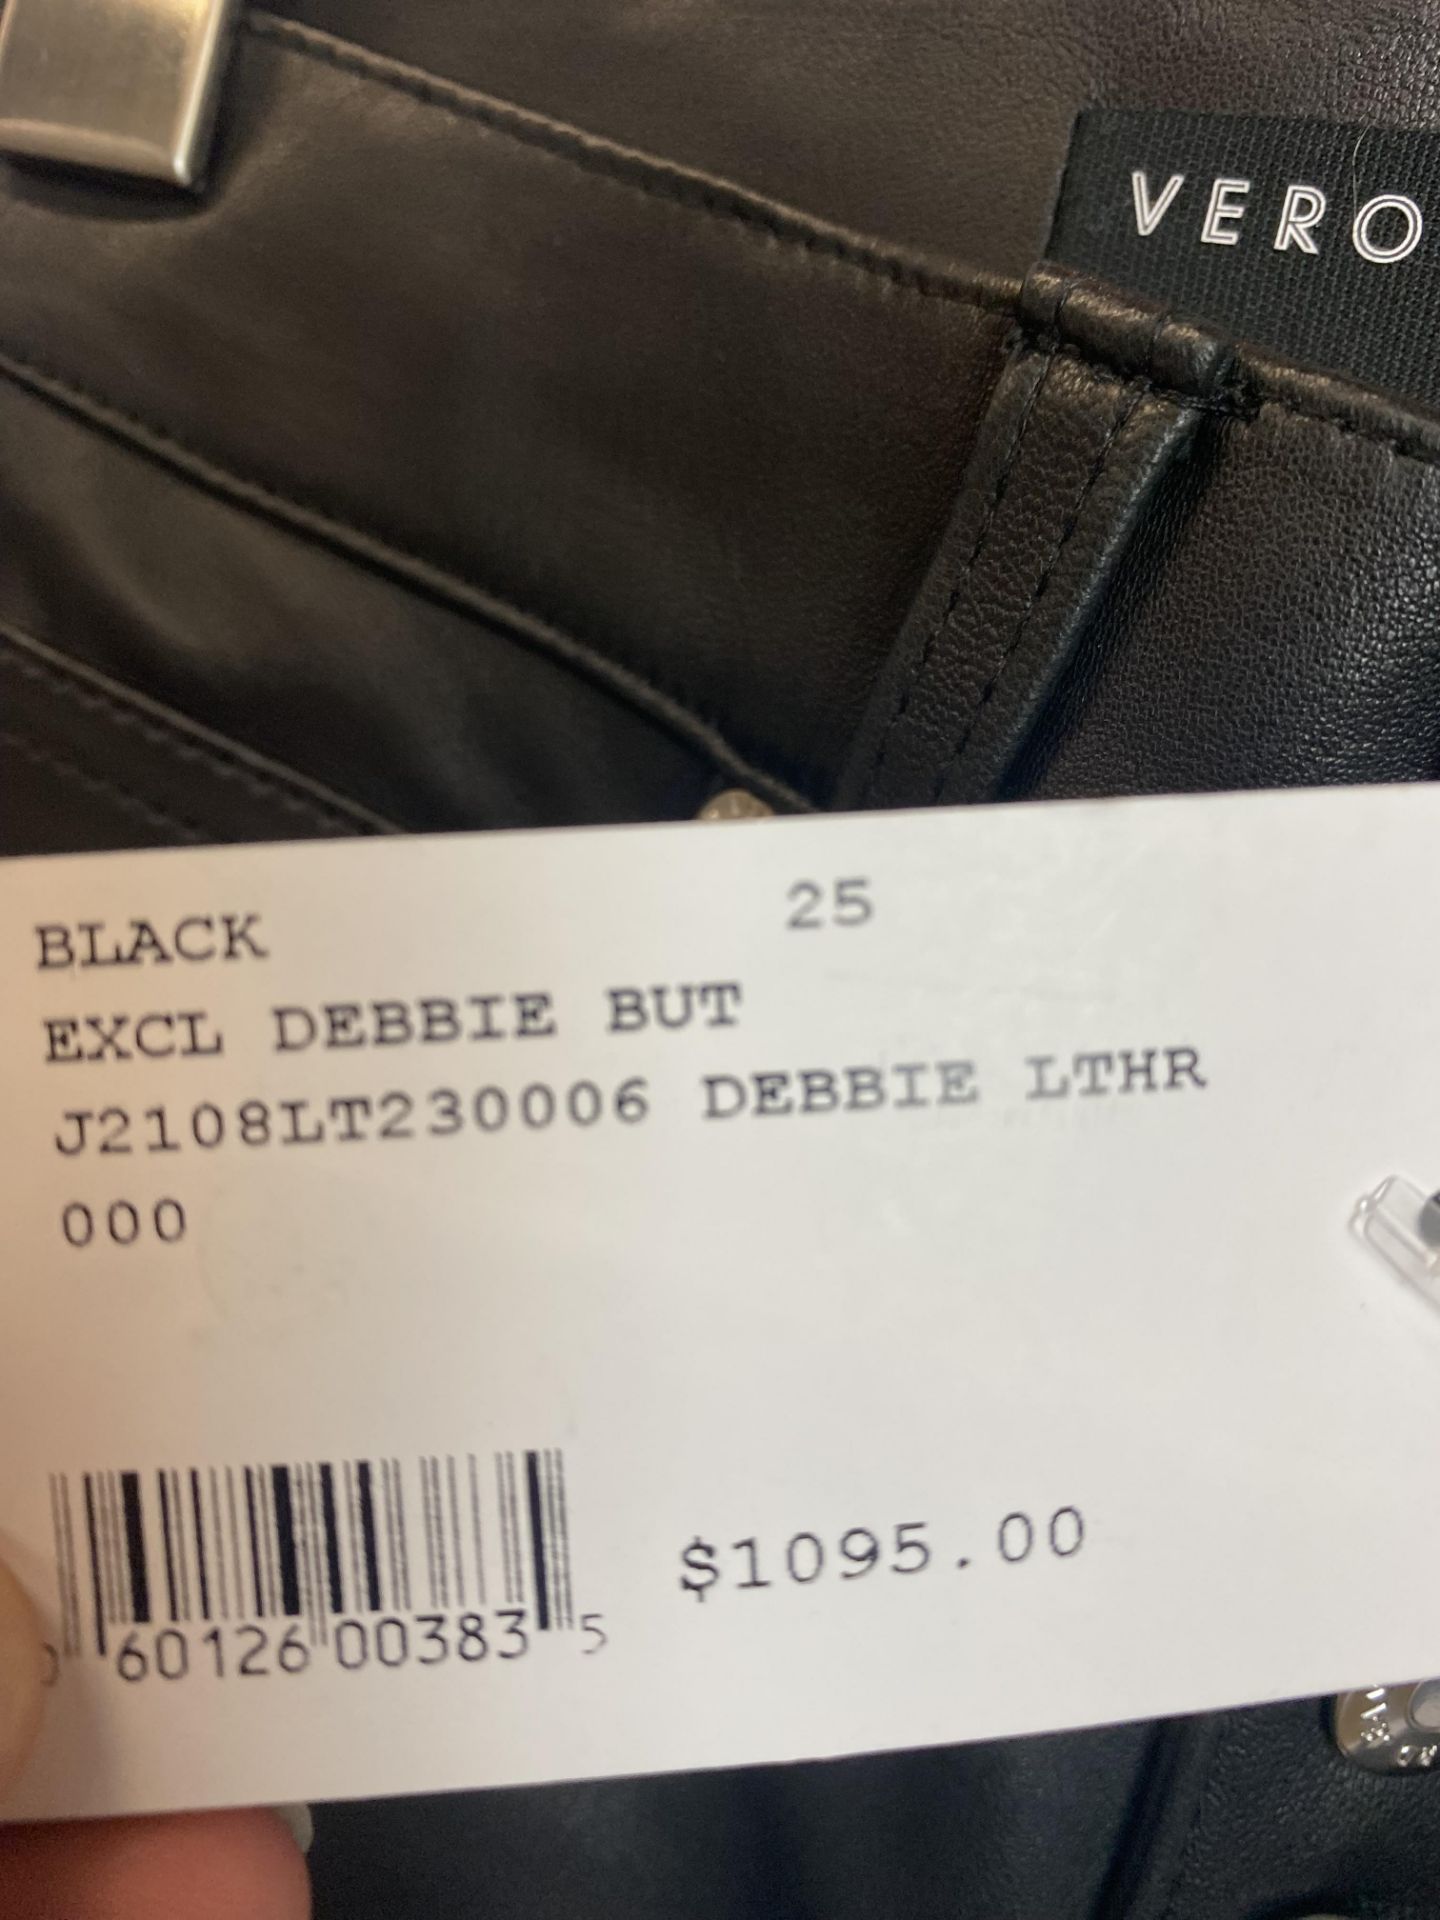 Veronica Beard Jeans Black Debbie "Leather", Size 25, Original Retail Price: $1095 - Bild 3 aus 4